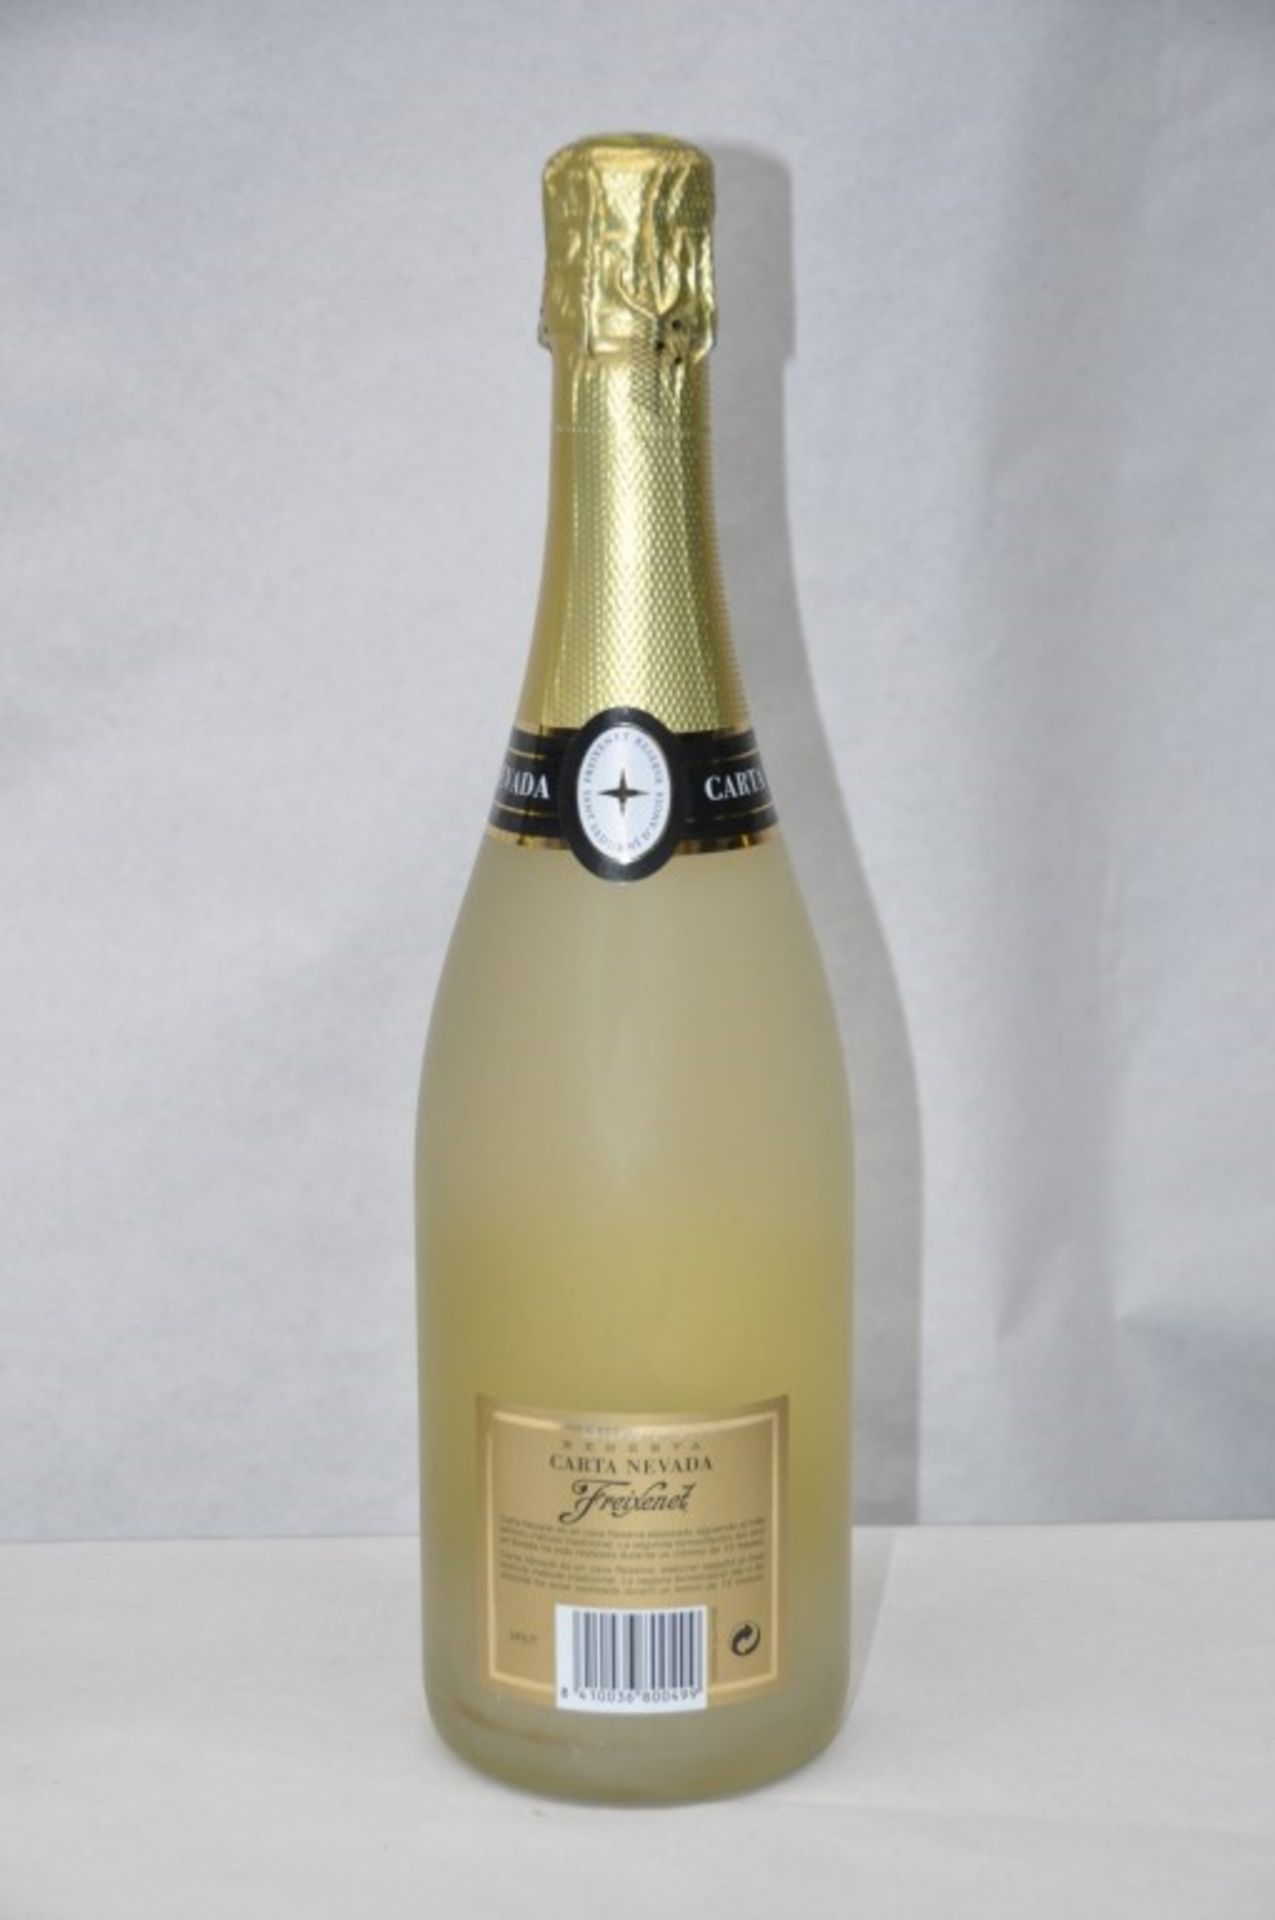 1 x Reserva Freixenet Carta Nevada Cava - 75cl Bottle - Sealed UK Stock - 11.5% Volume - CL103 - Ref - Image 3 of 4